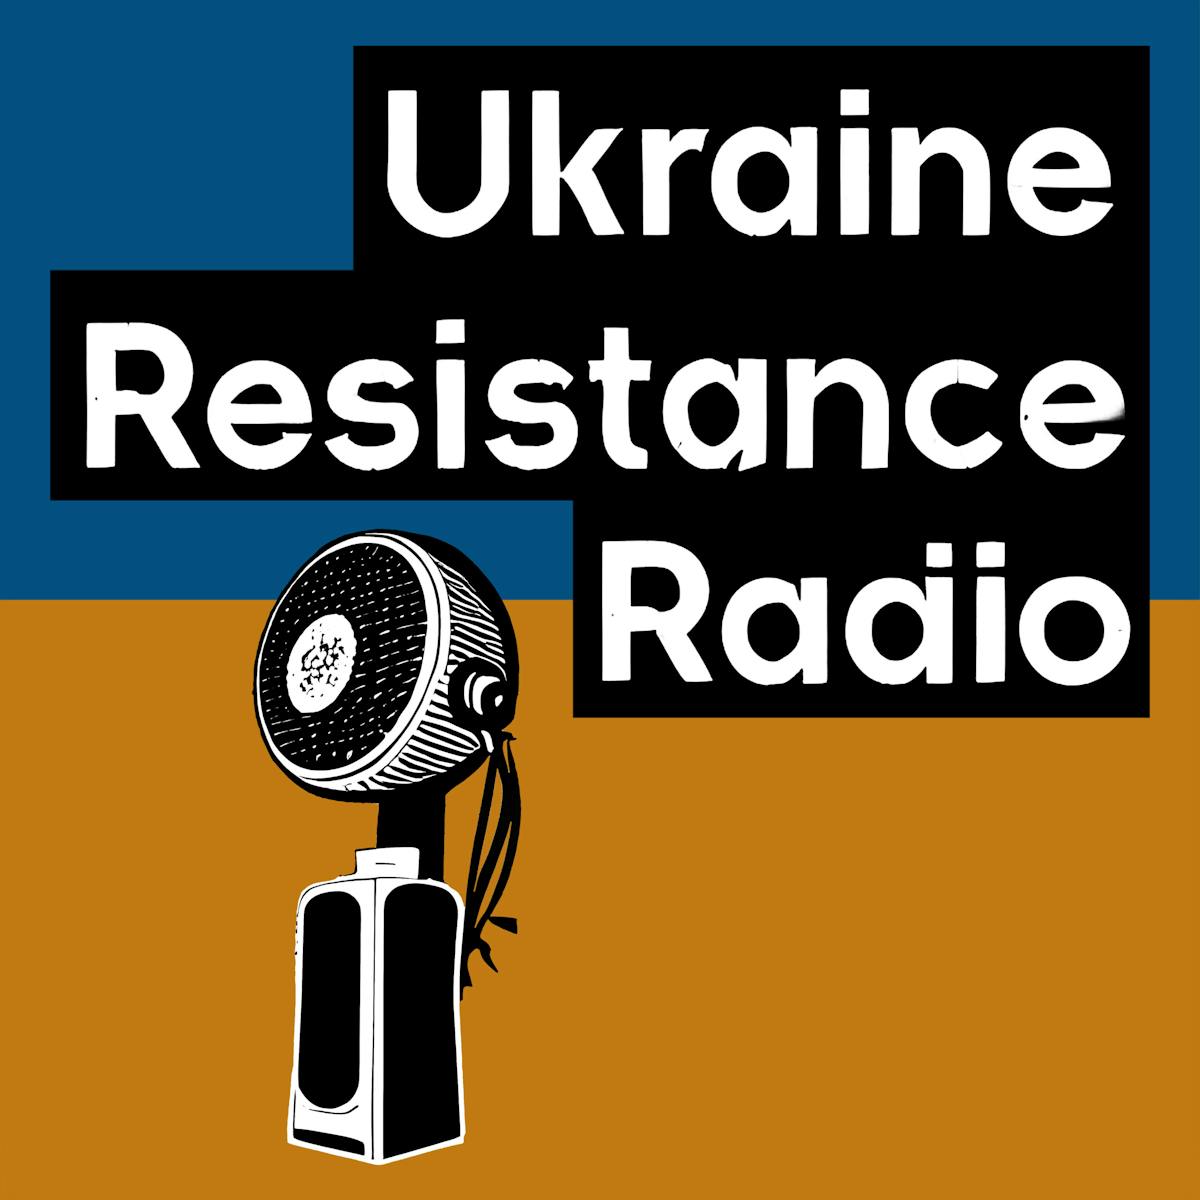 Fiber x Ukraine Resistance Radio